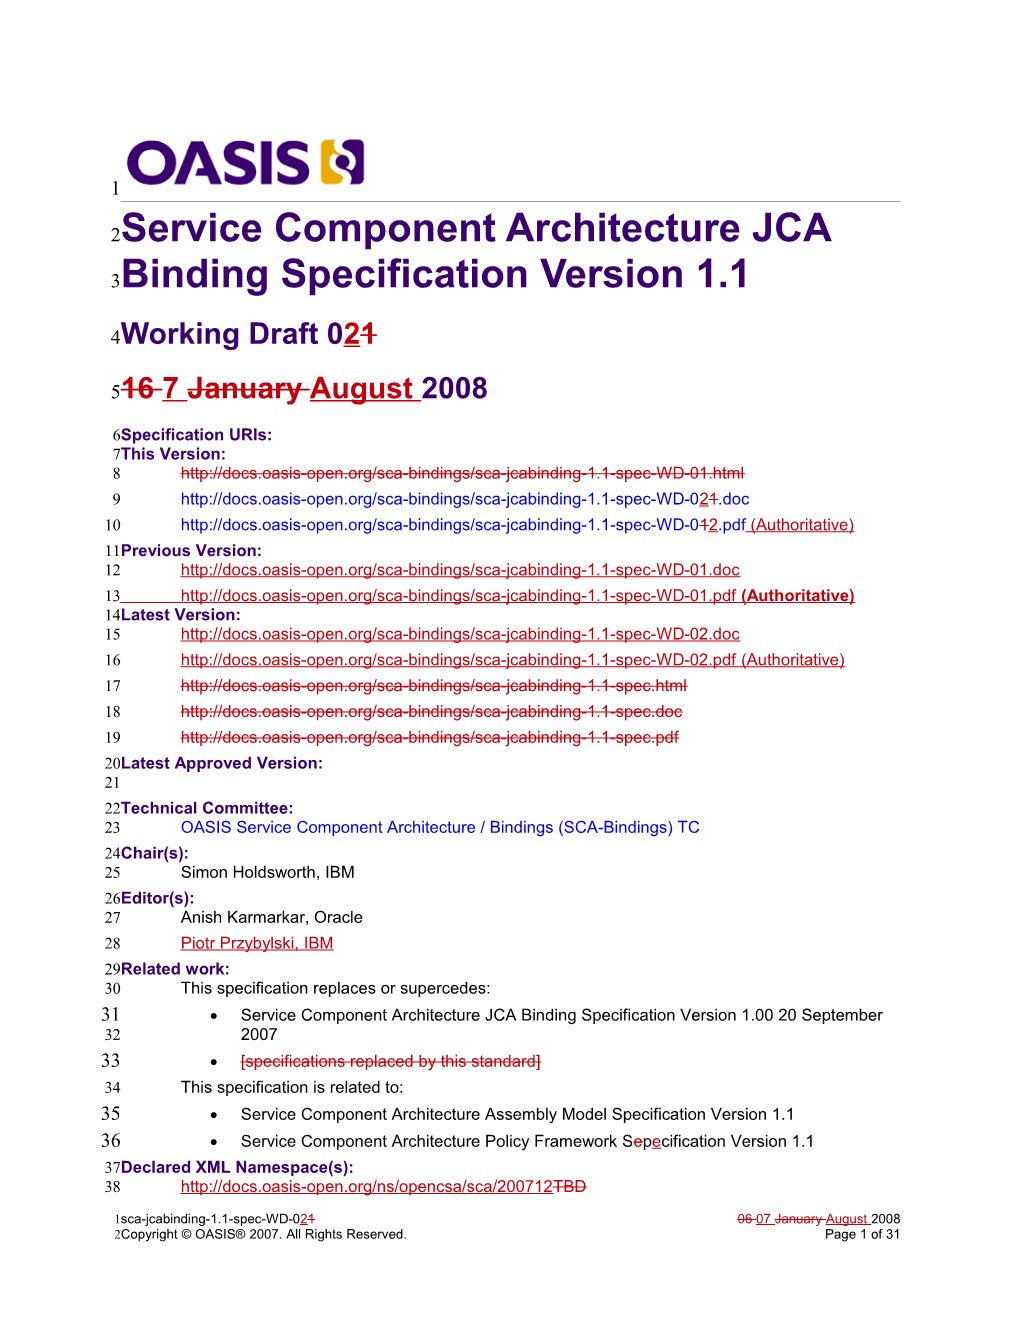 Service Component Architecture JCA Binding Specification Version 1.1